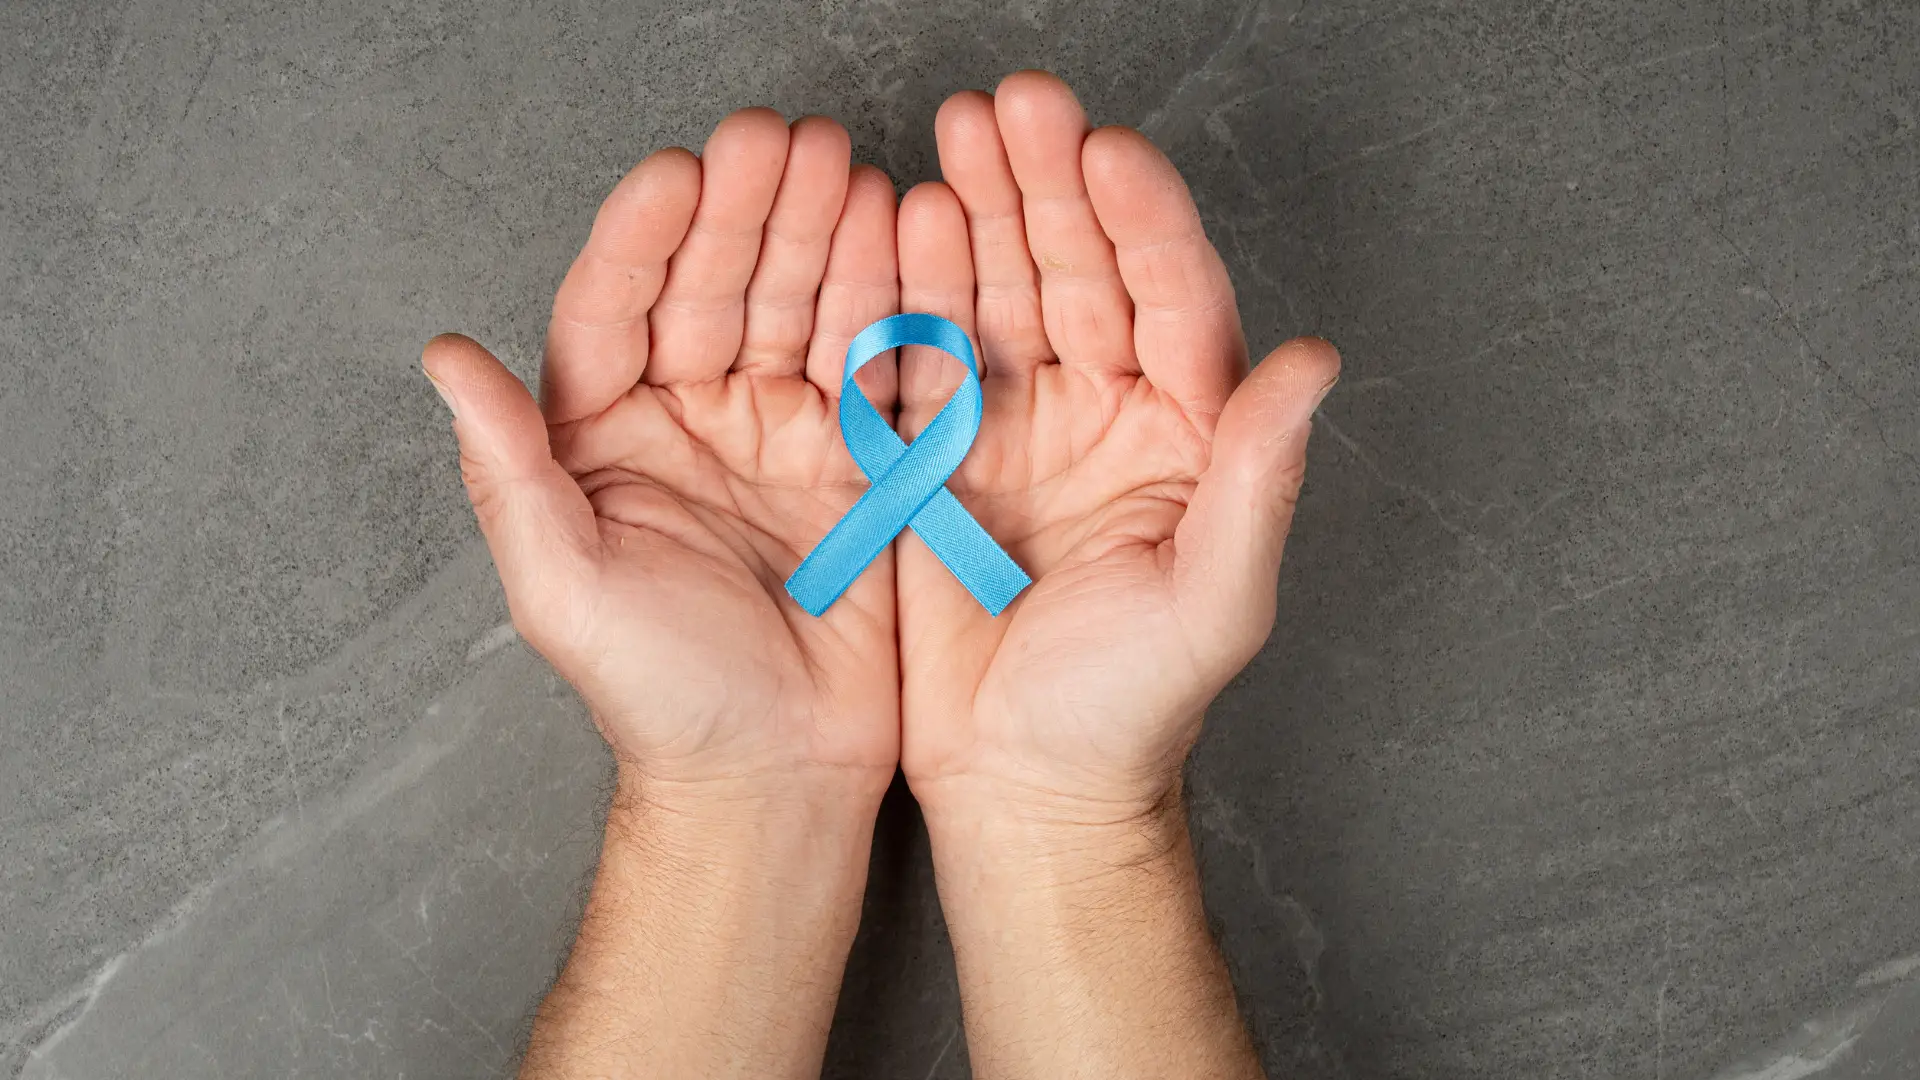 Aos 80, mais de 80% dos homens sofre de cancro da próstata: fatores de risco e sintomas